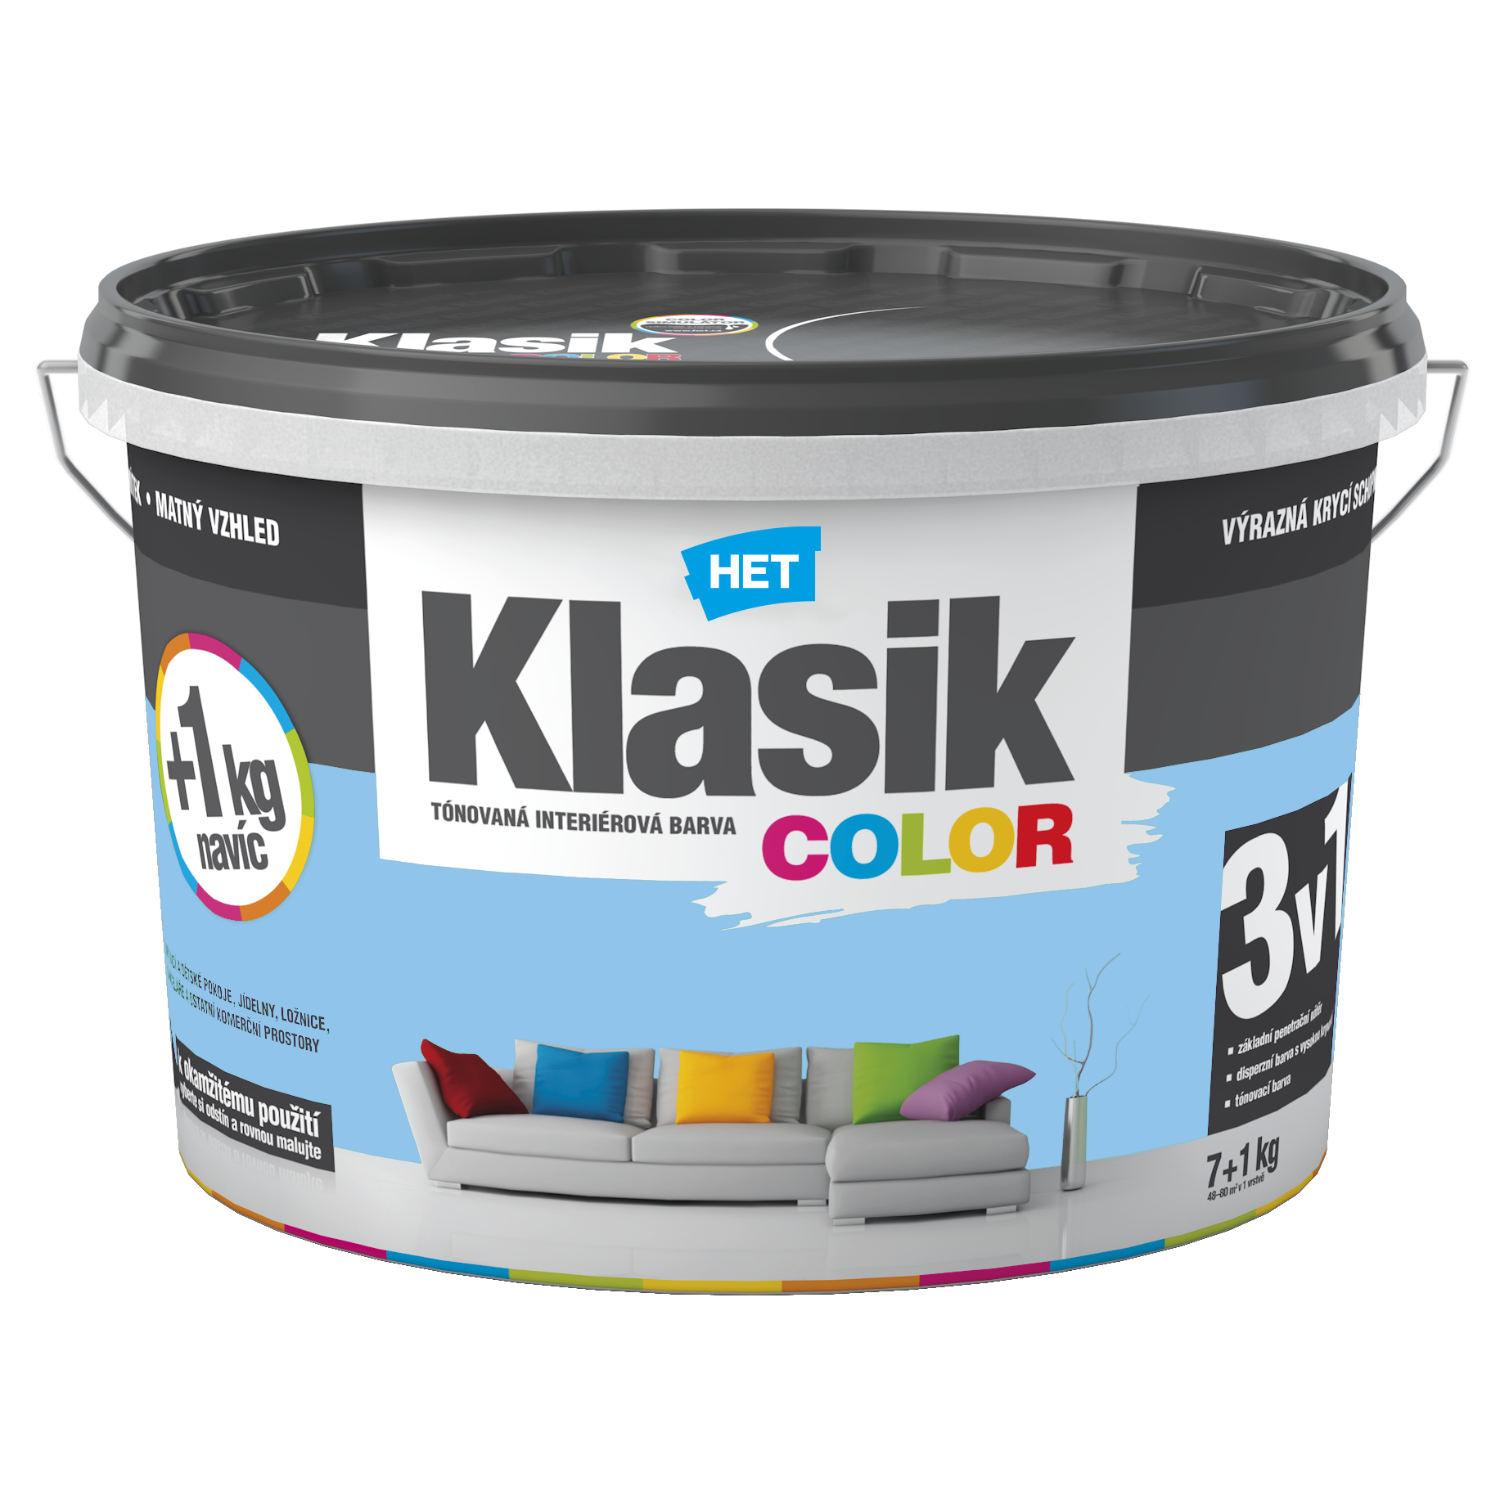 HET Klasik COLOR tónovaná interiérová akrylátová disperzná oteruvzdorná farba 7 kg + 1 kg zdarma, KC0347 - fialový orgovánový